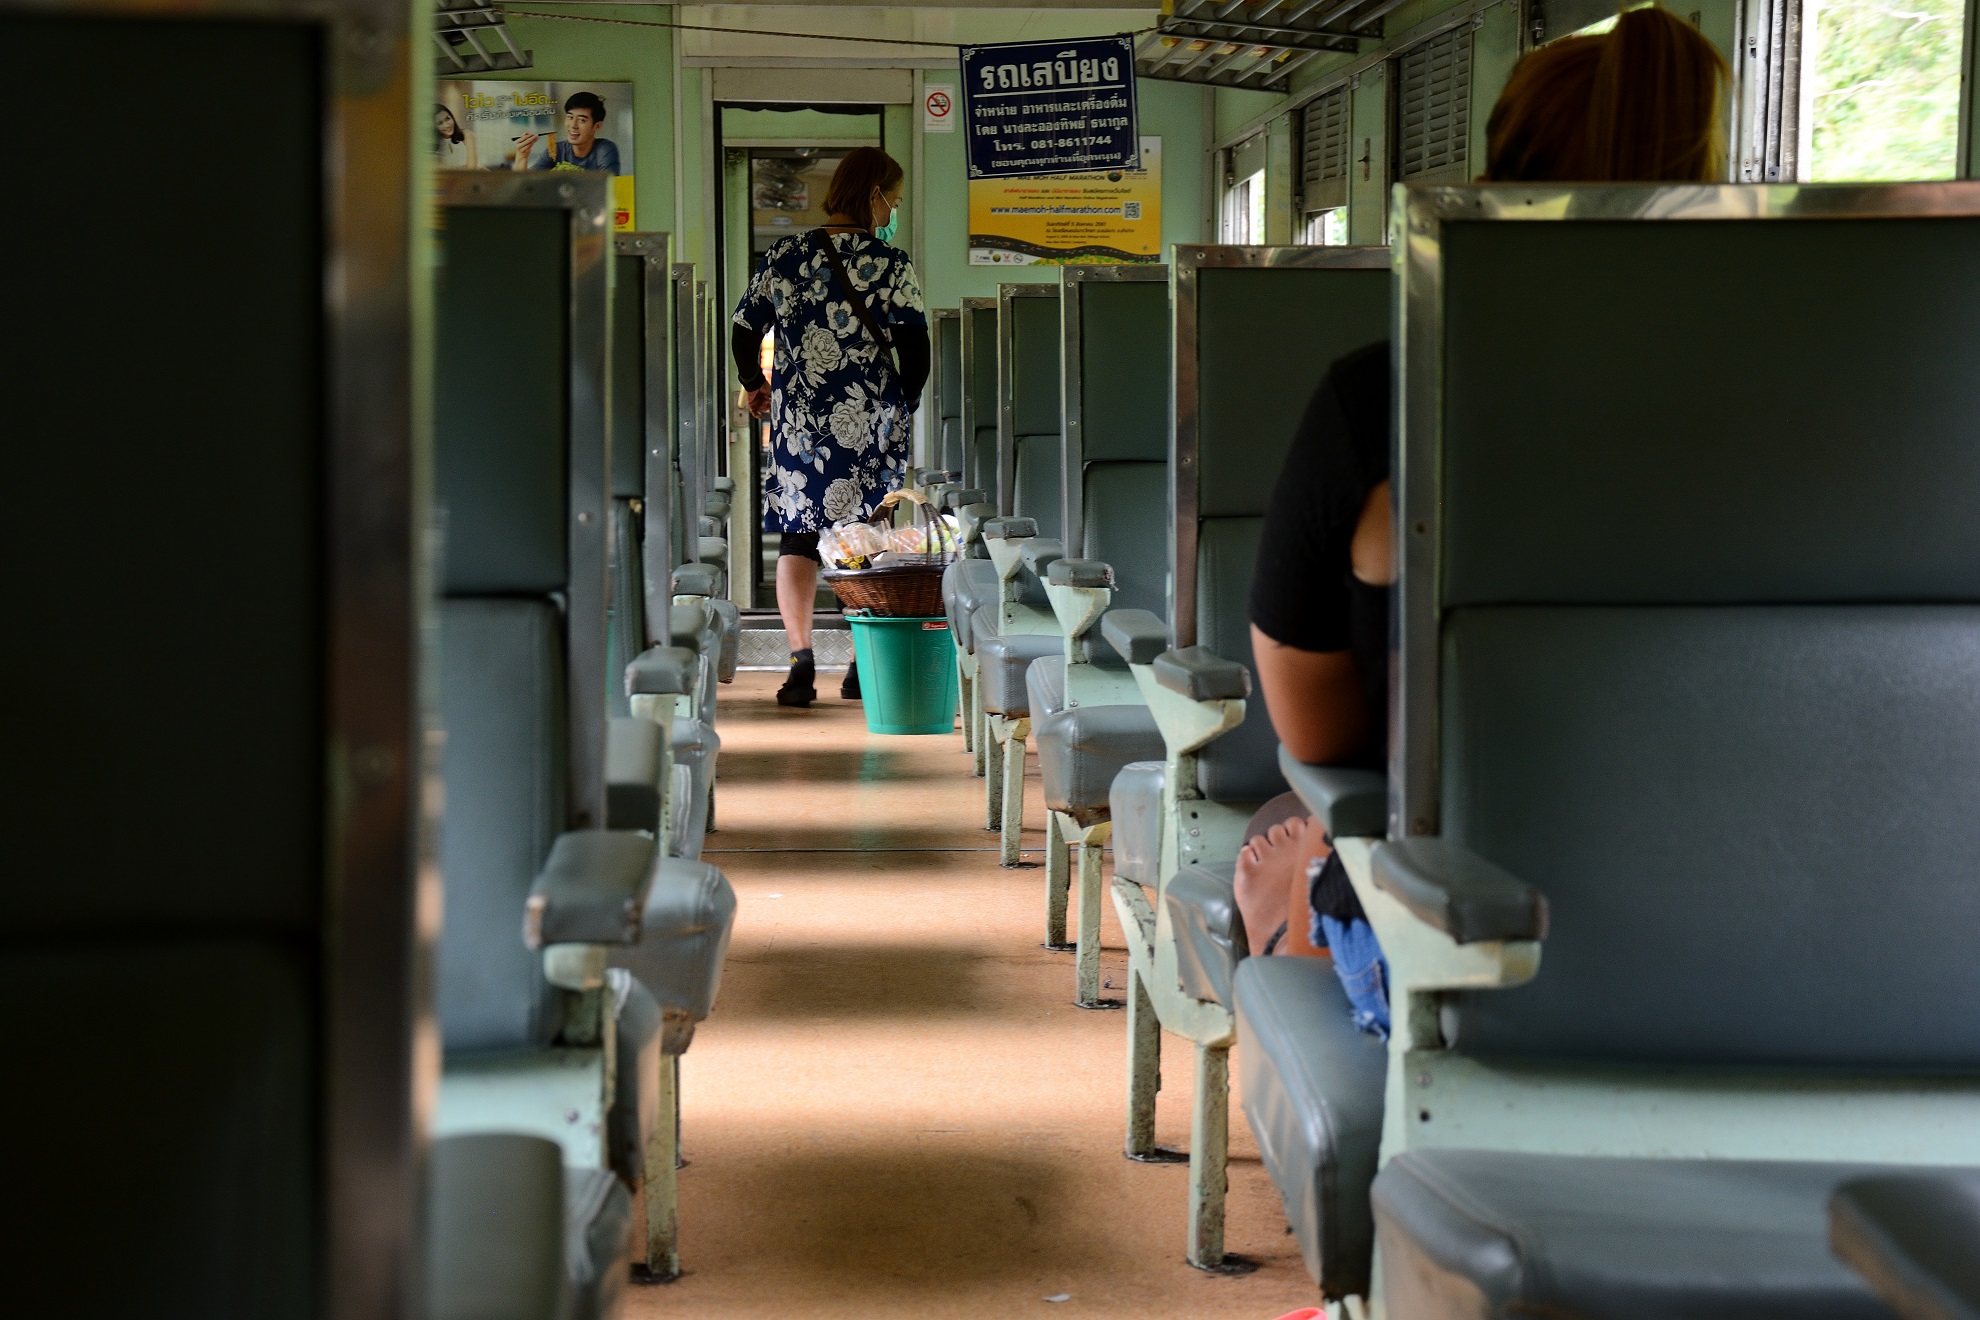 3rd class carriage travelling between Bangkok and Pattaya